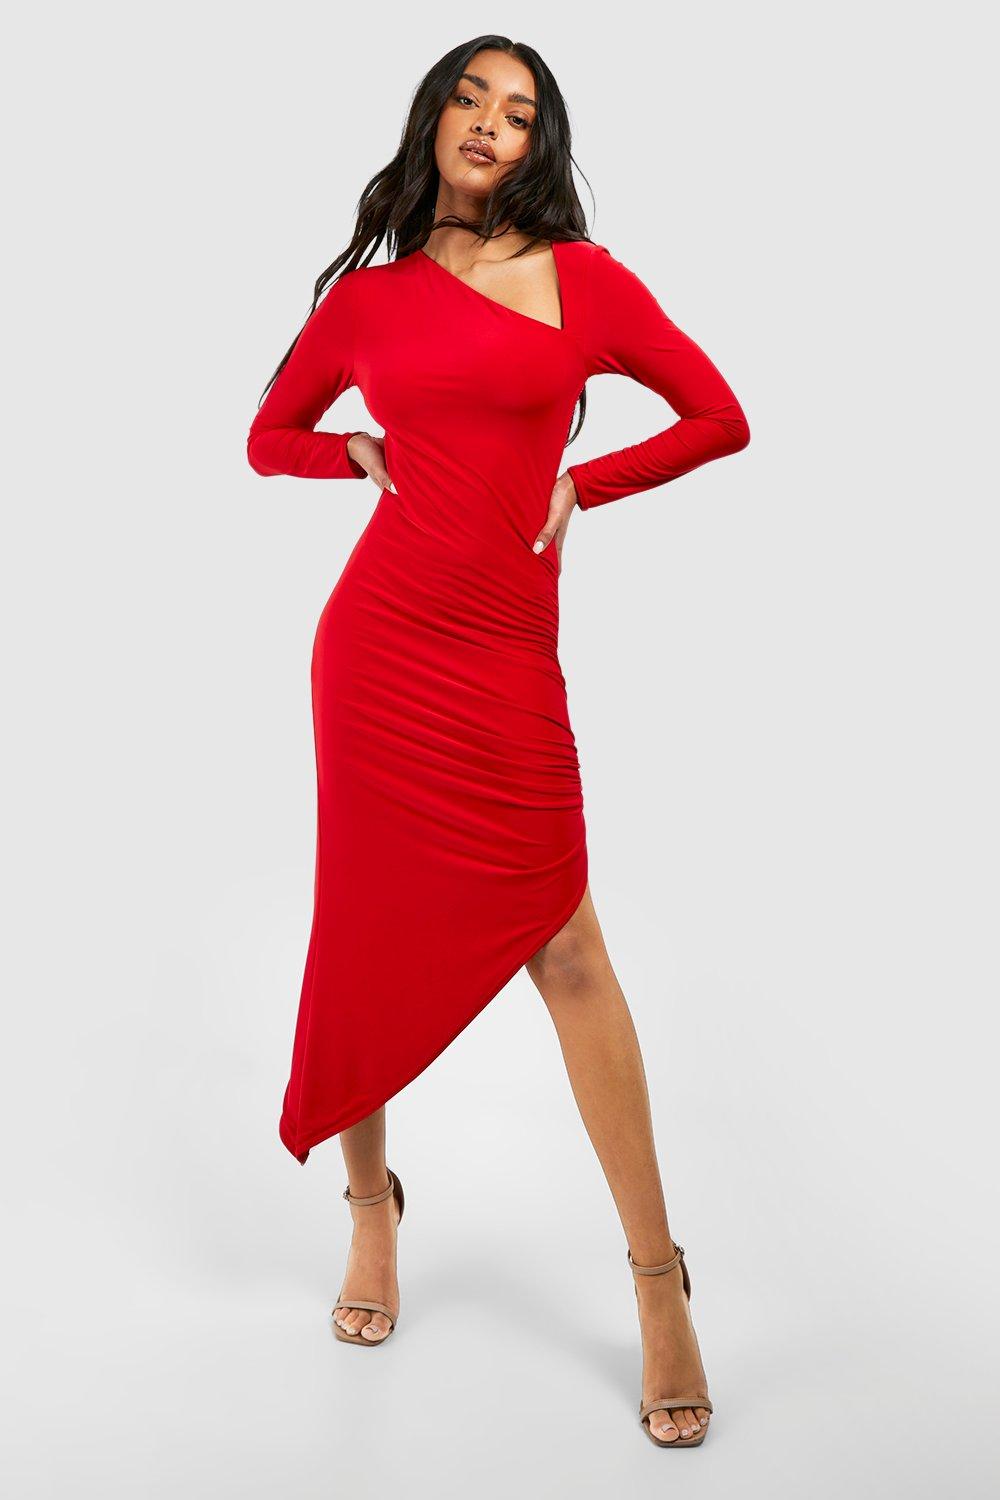 Buy Red Block Print Rayon Flared Midi Dress at Amazon.in